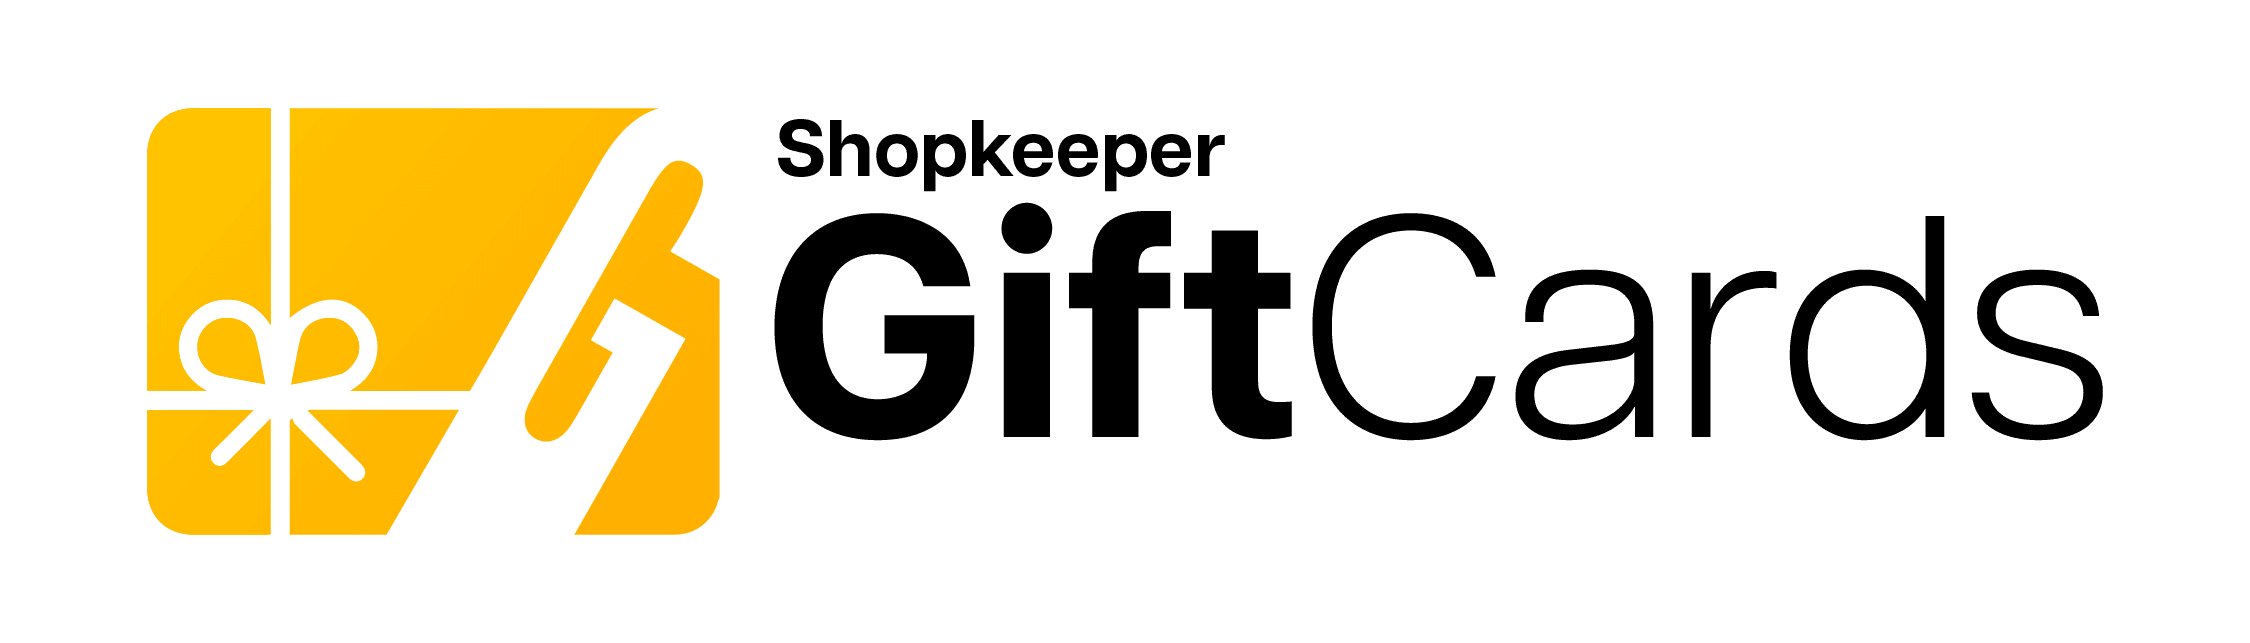 Shopkeeper Family Logos 14